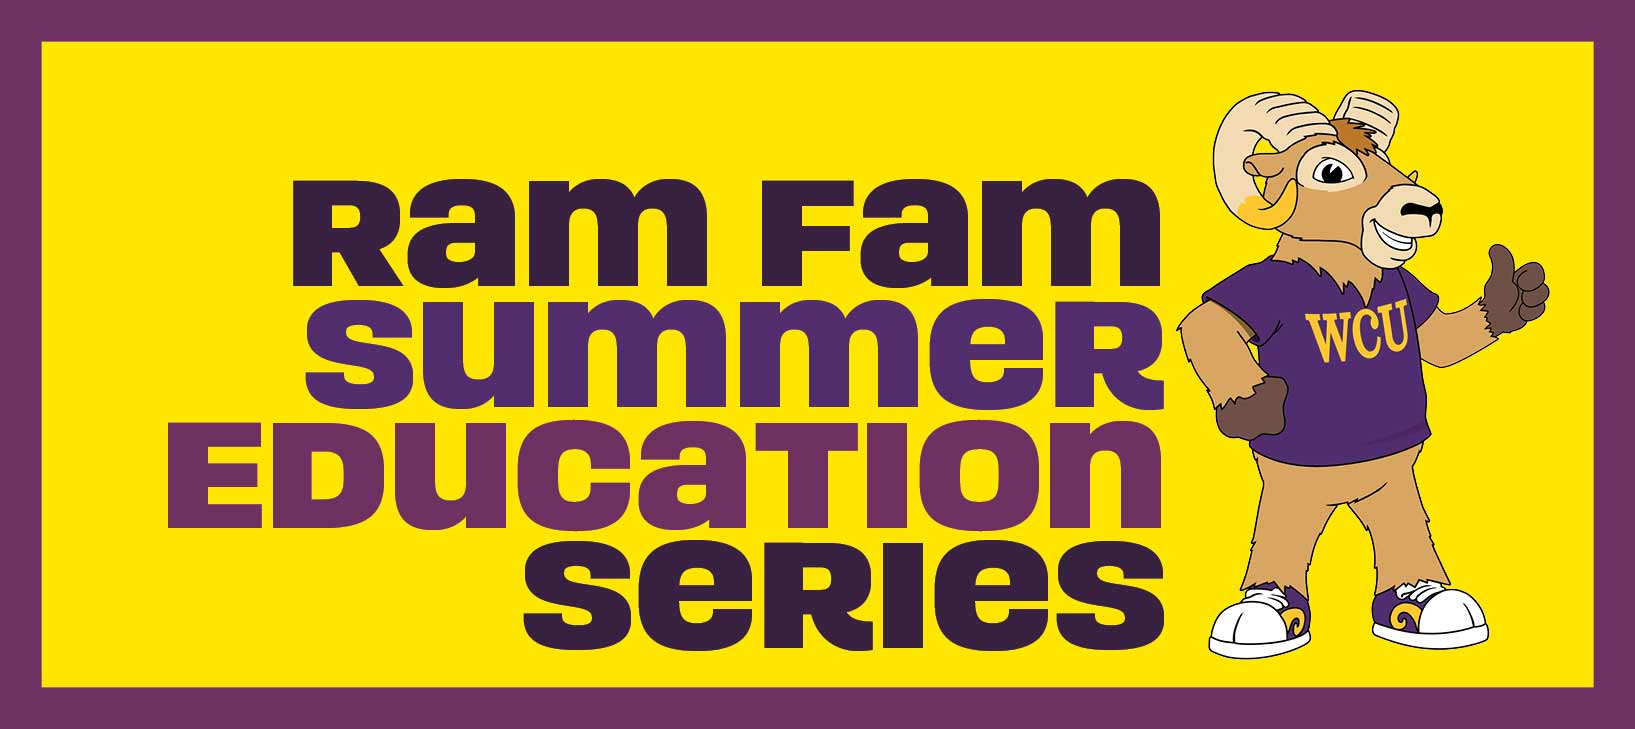 Ram Fam Summer Education Series